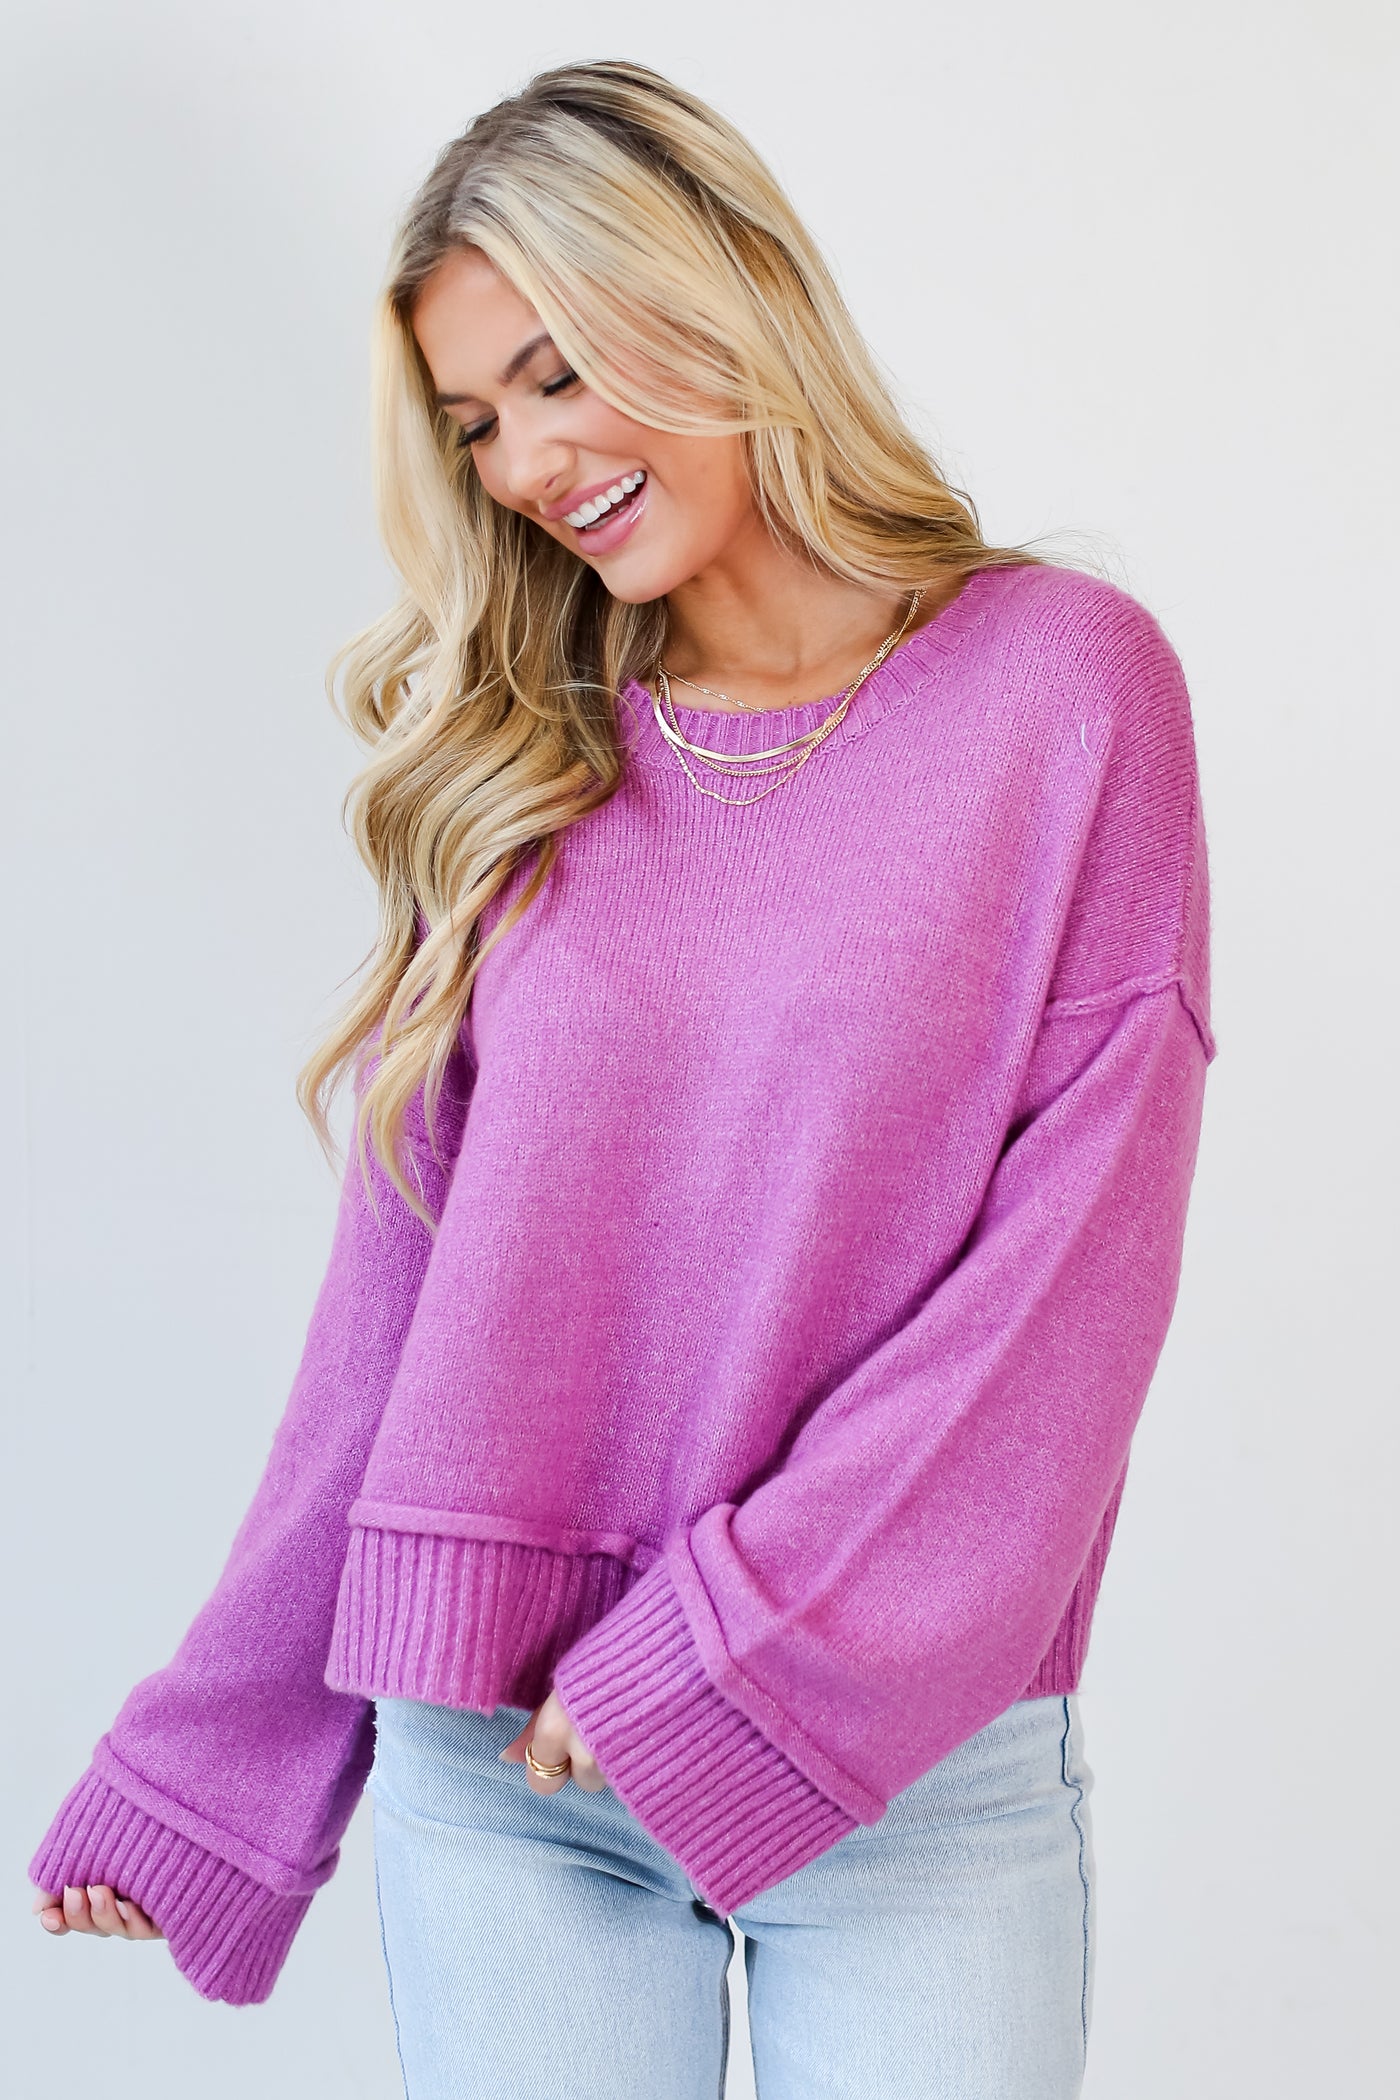 pink Sweater close up